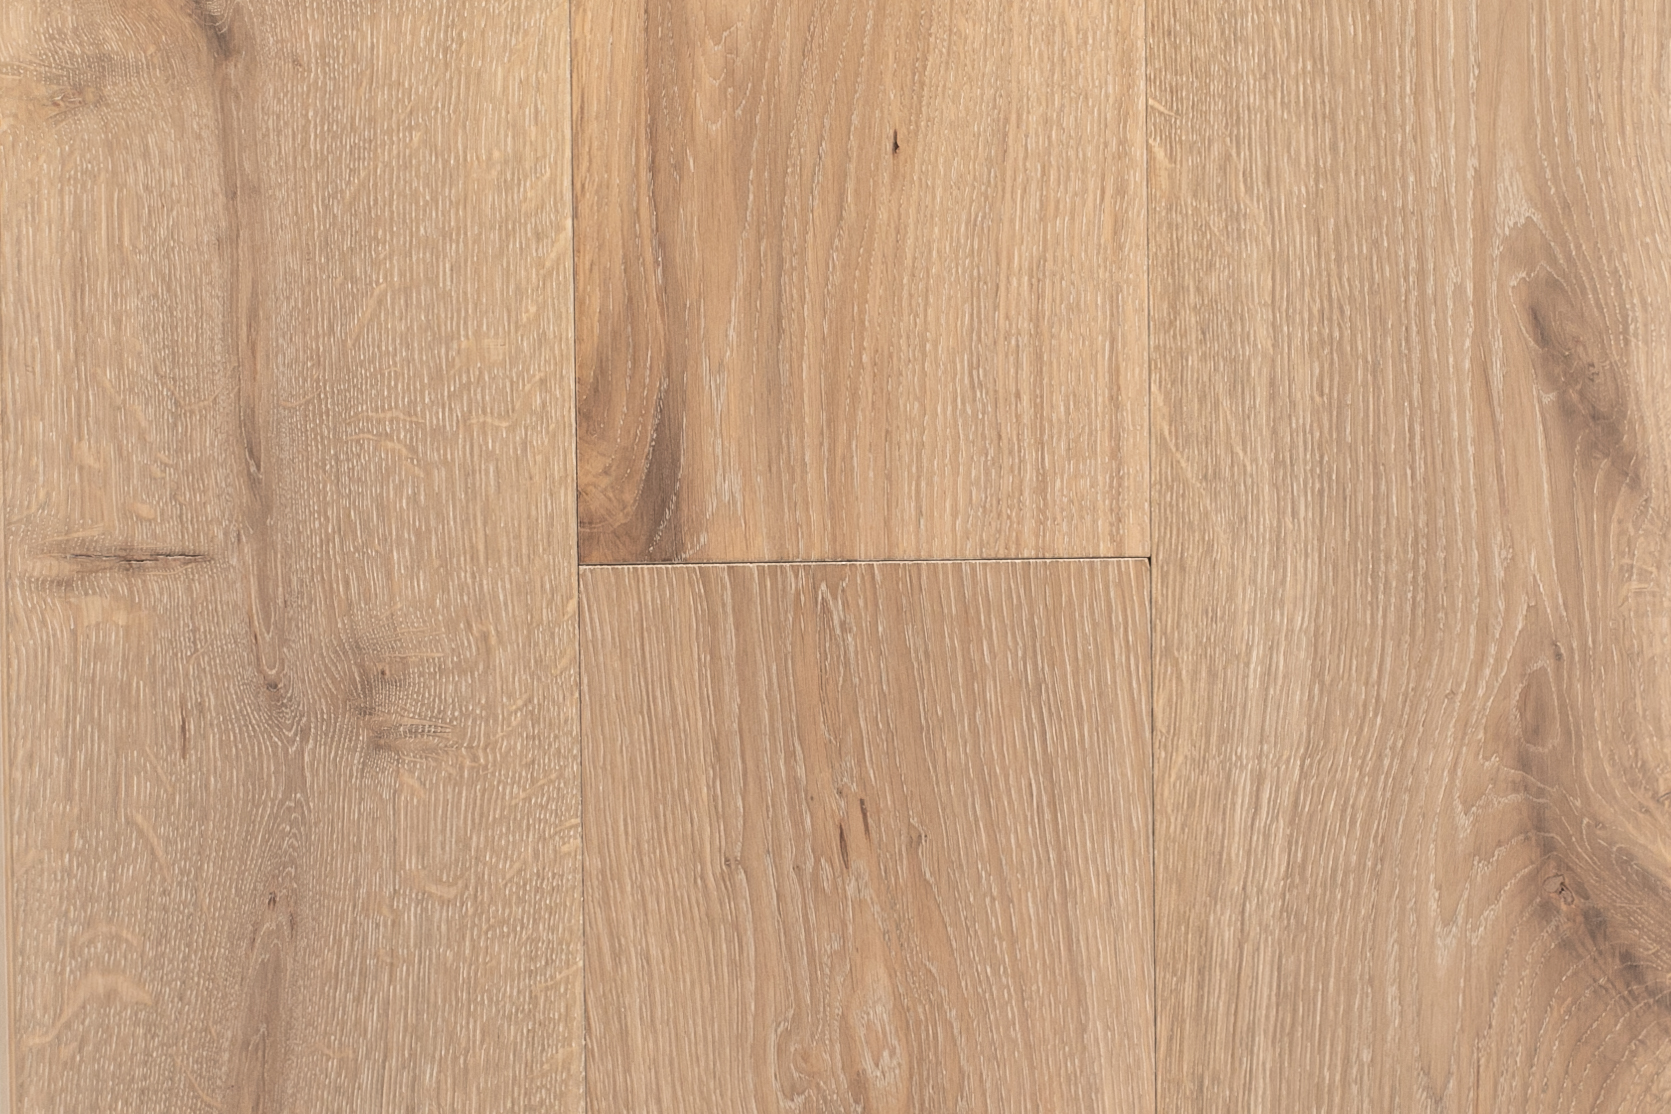 Image of Mount Rushmore Wood Flooring Finish on European Oak